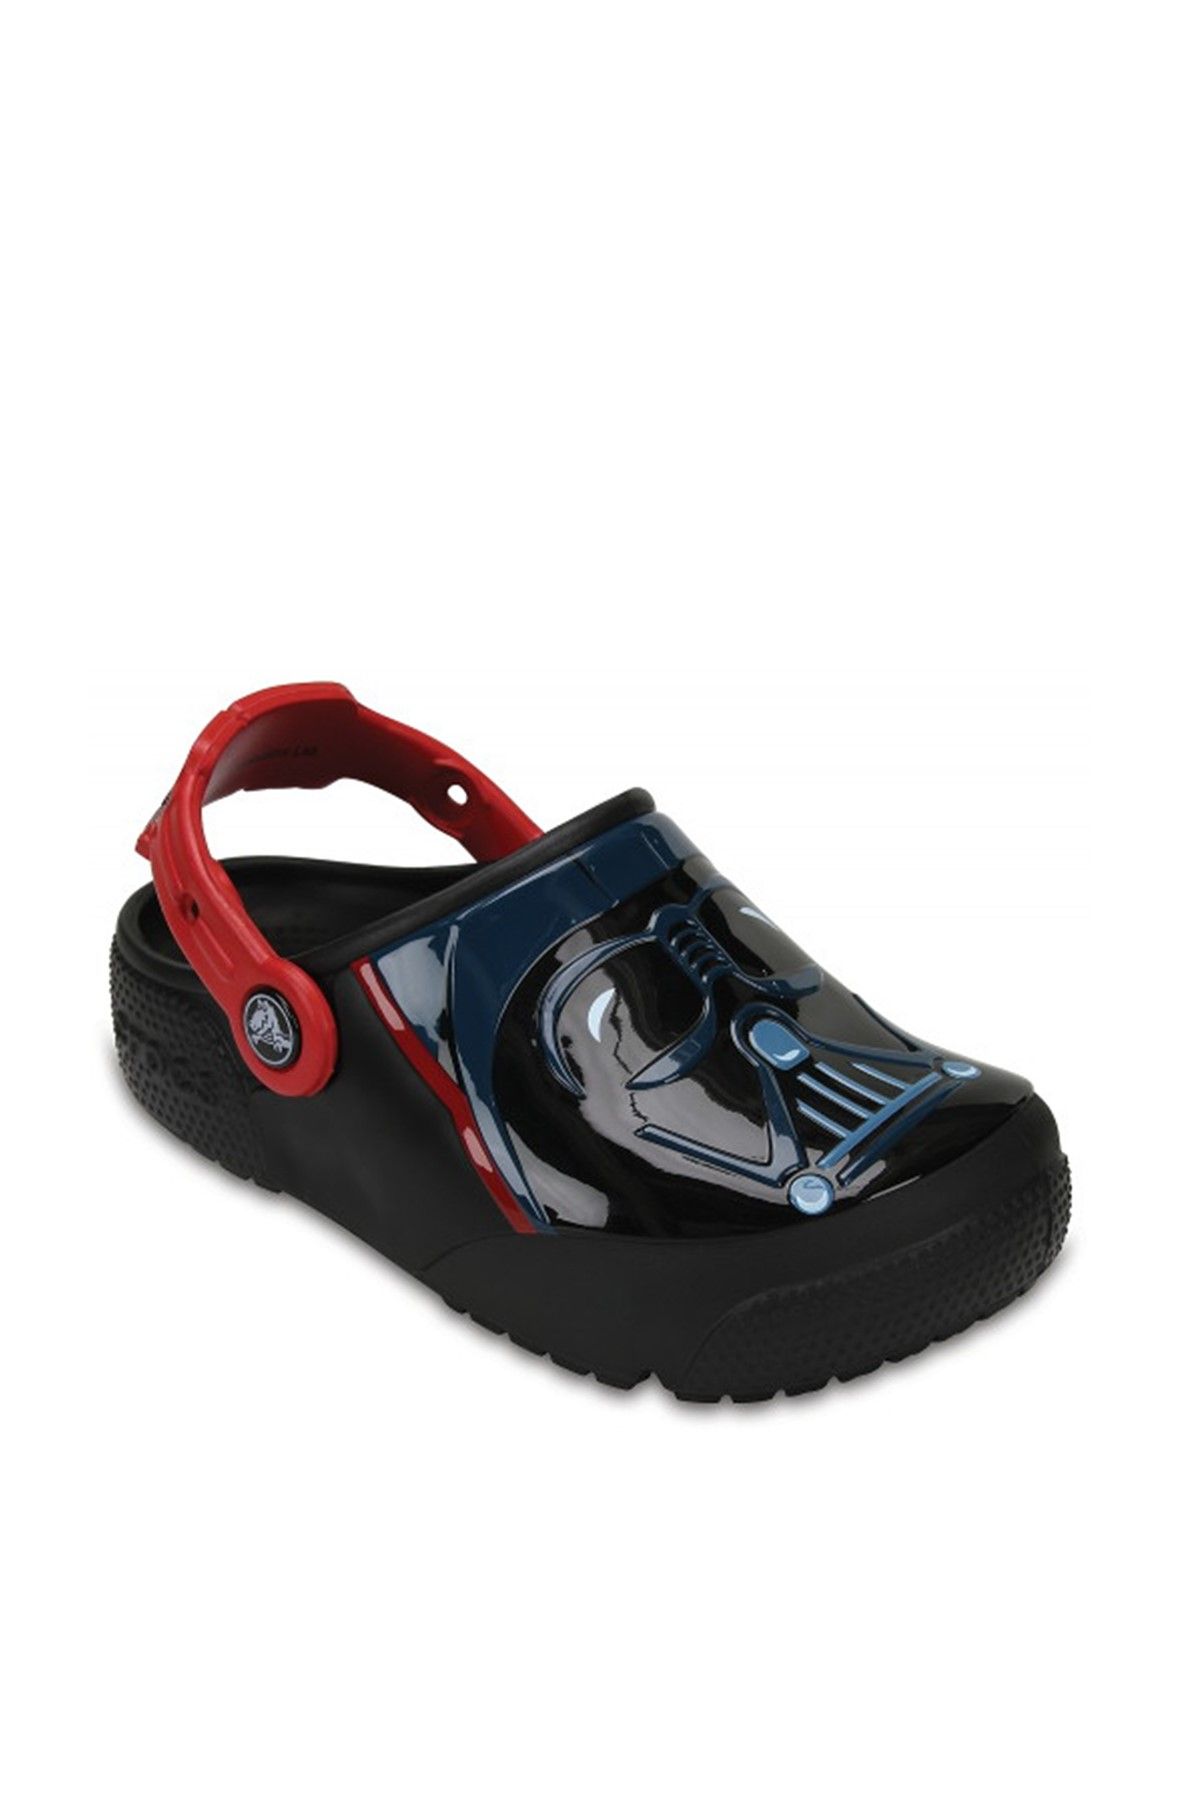 Crocs Siyah Star Wars Çocuk Sandalet 204137-001